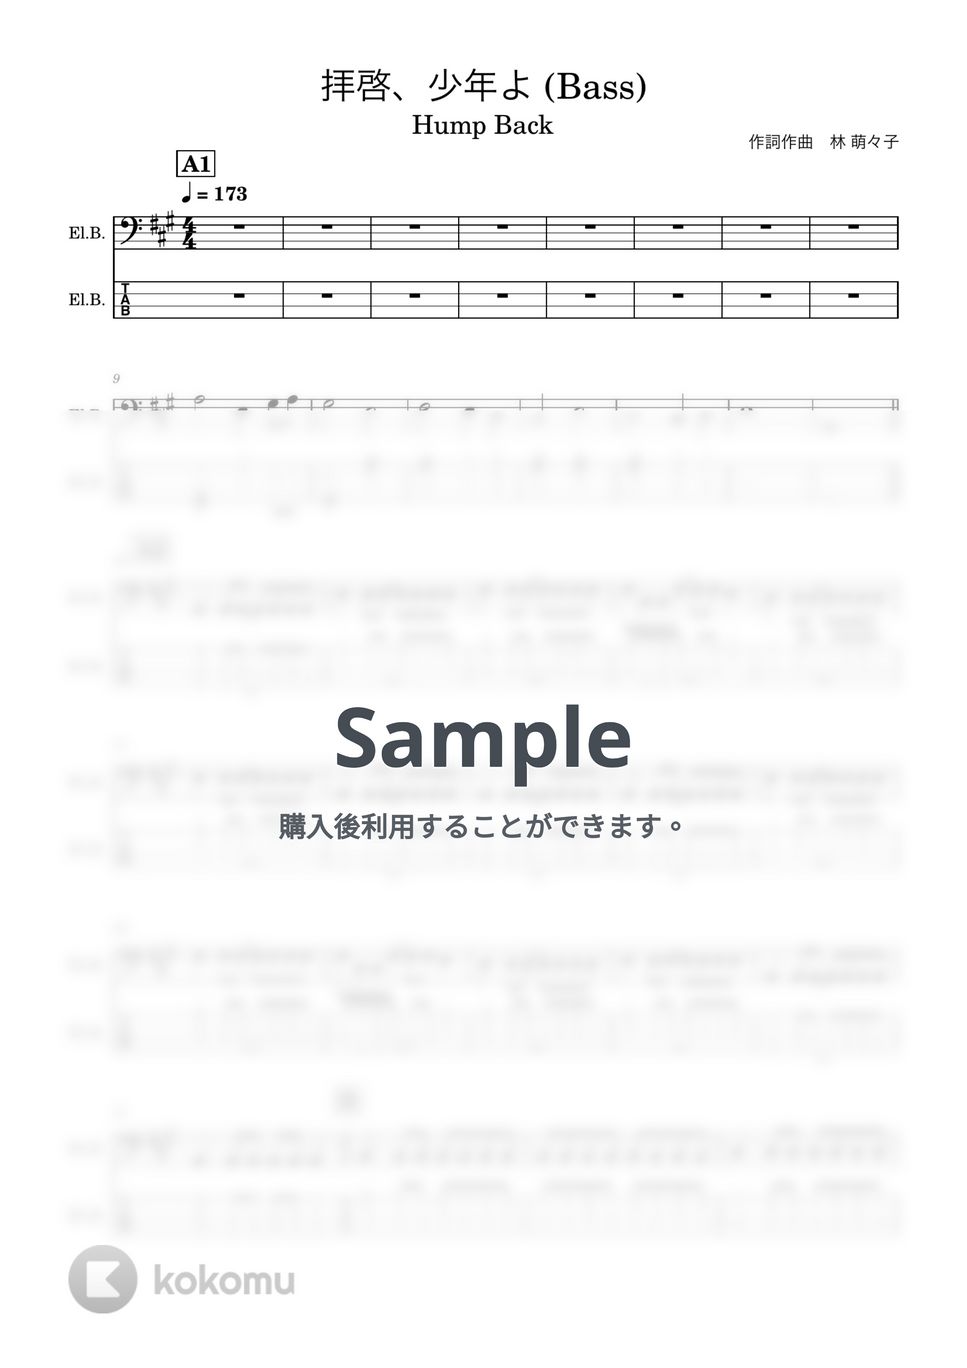 Hump Back - 背景、少年よ (日本テレビ系『バズリズム02』エンディングテーマ、ベース譜) by Kodai Hojo